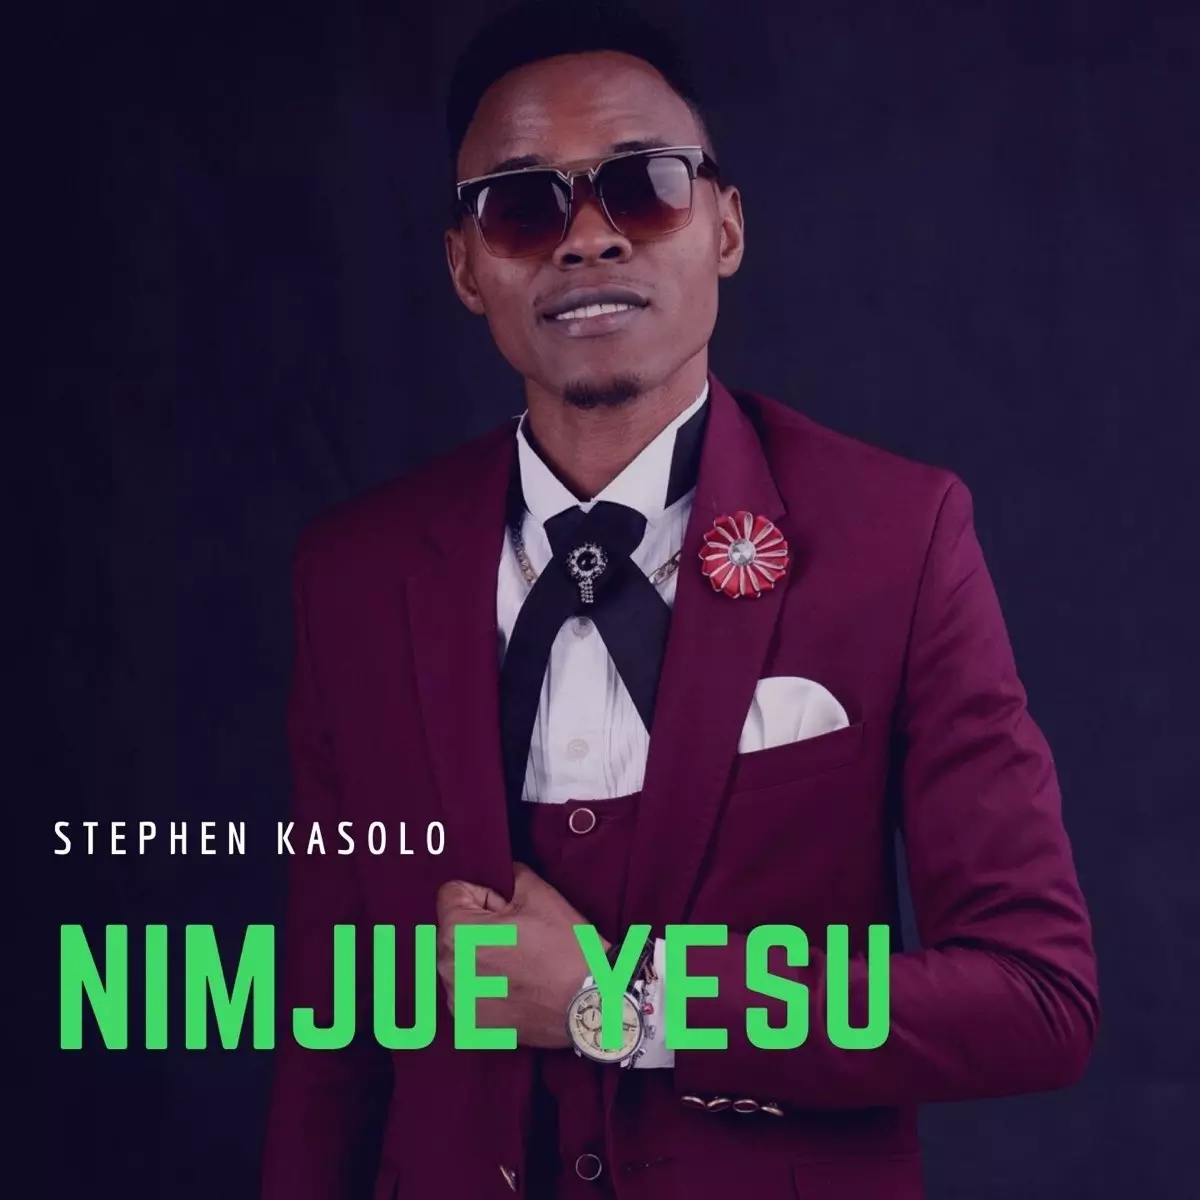 Nimjue Yesu - Single by Stephen Kasolo on Apple Music